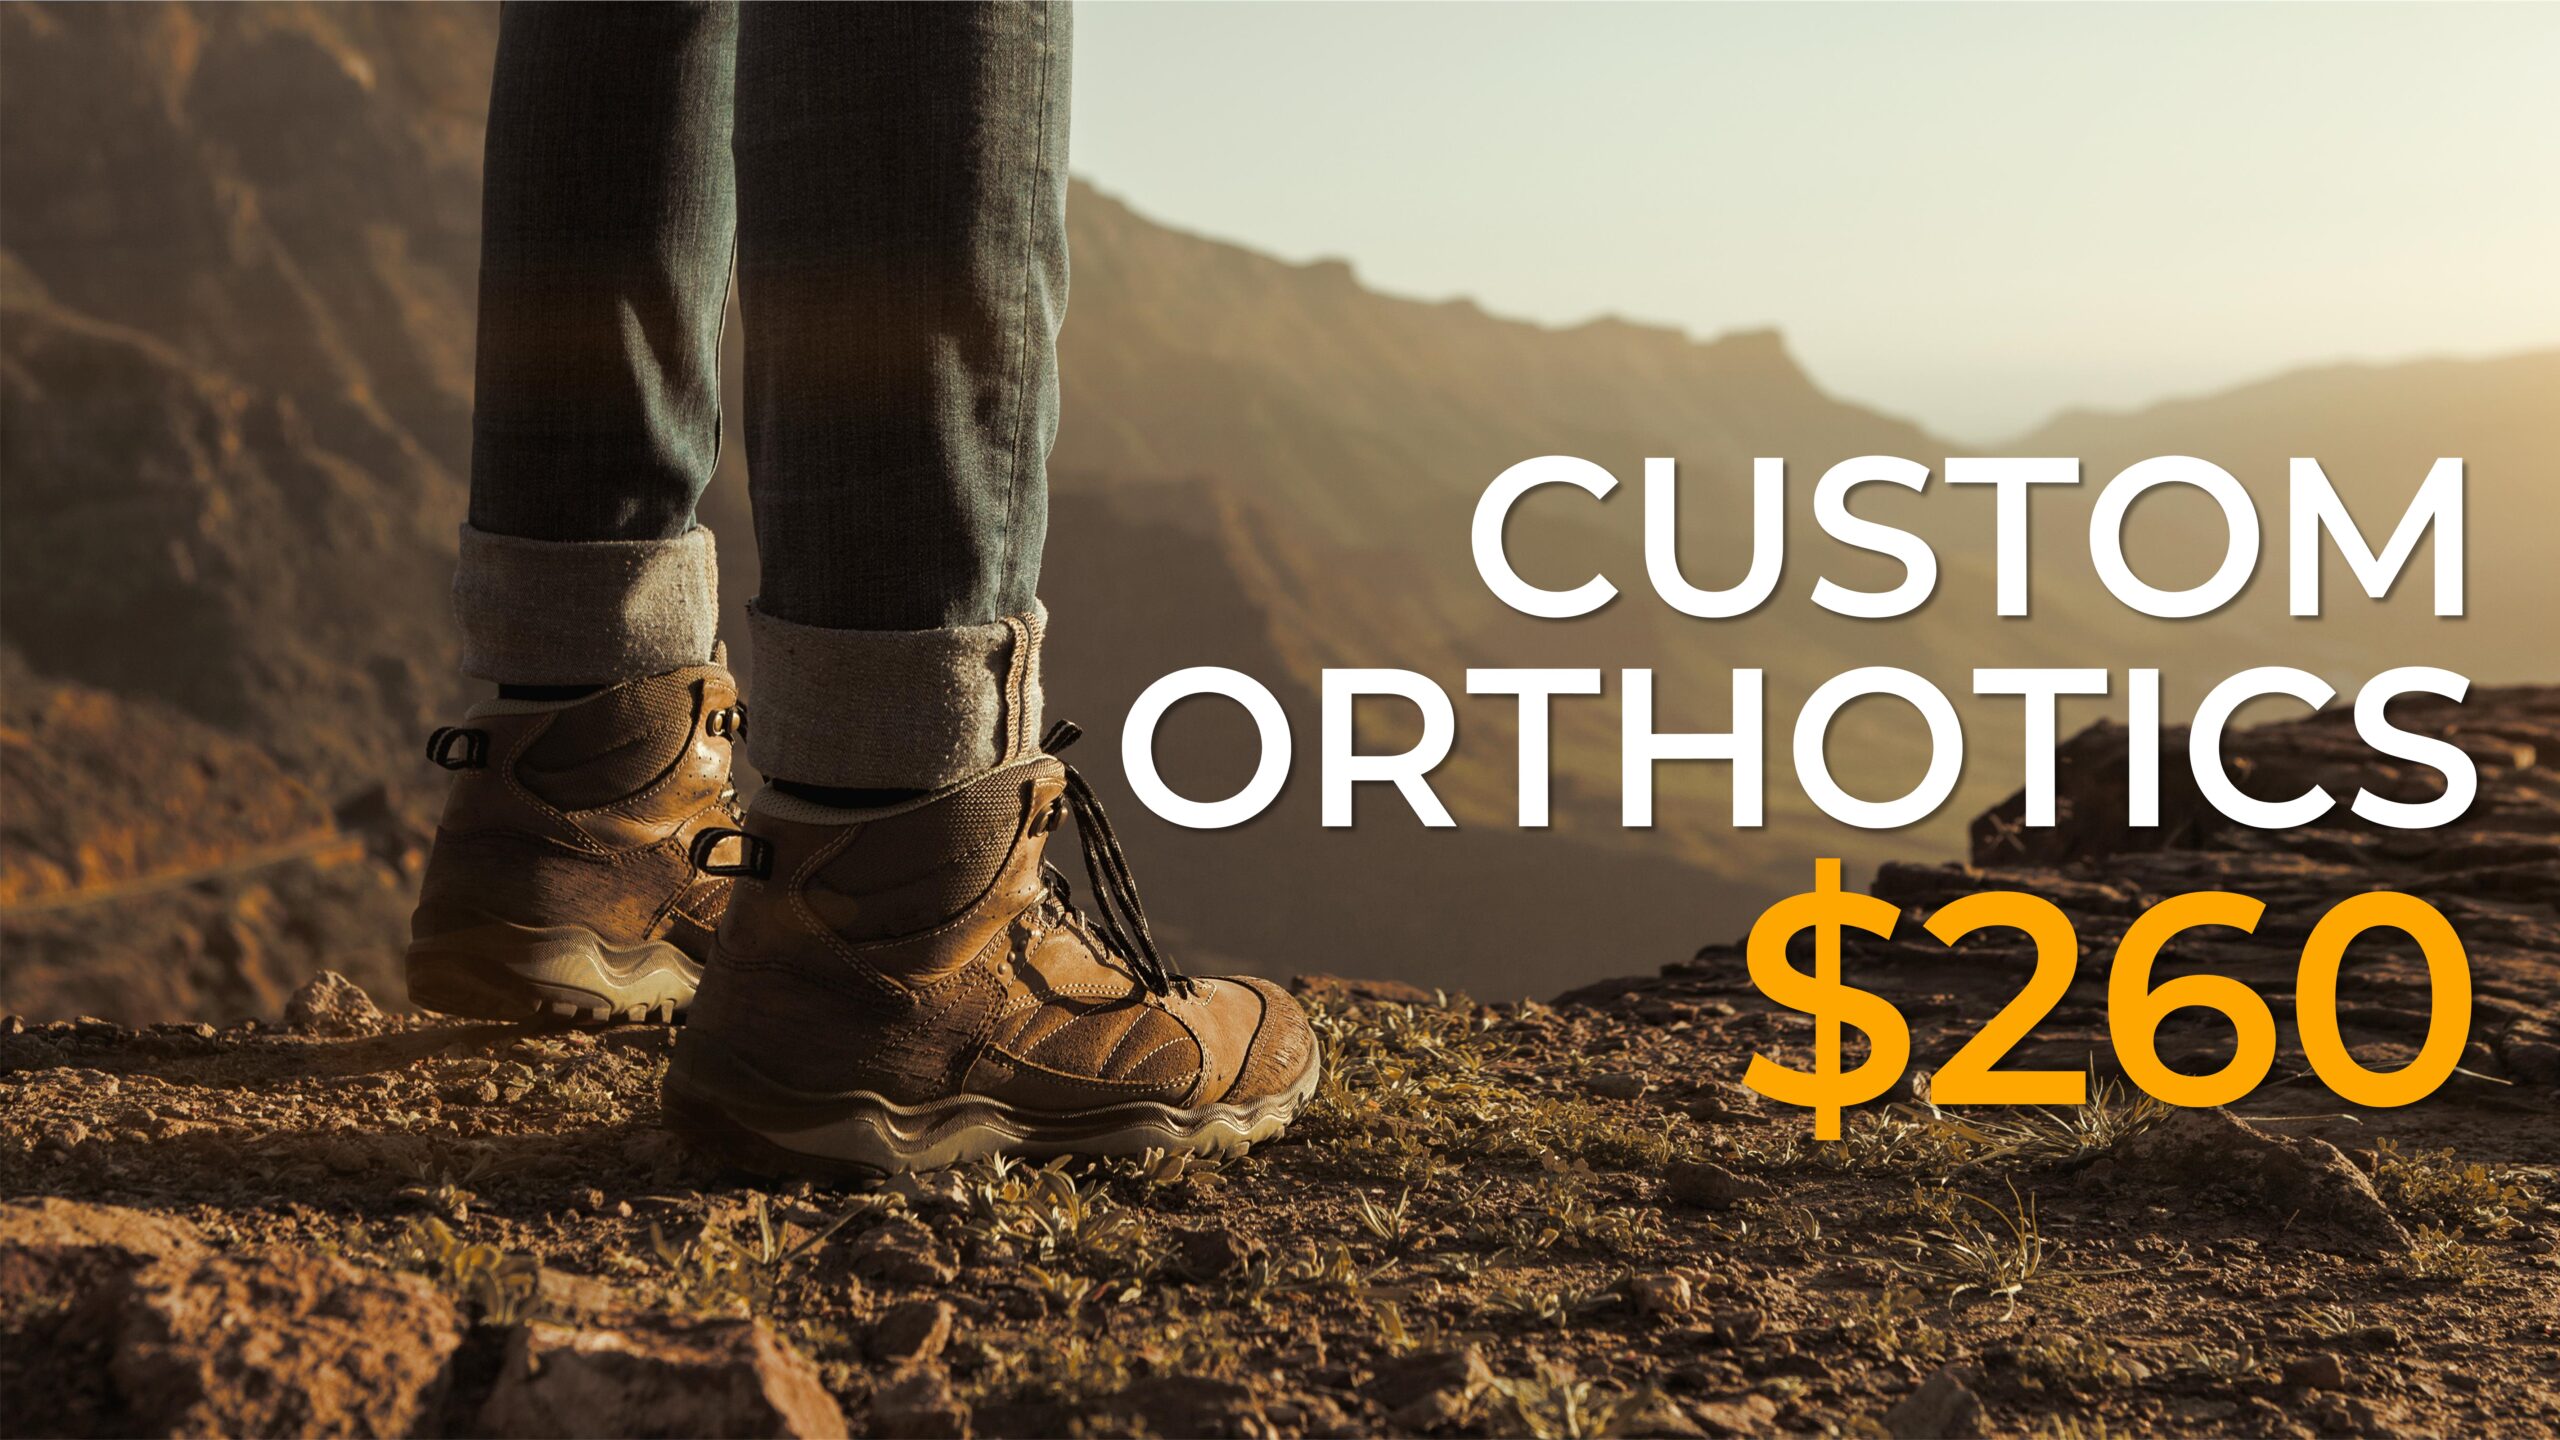 Custom Orthotics are only $260 at RMFA